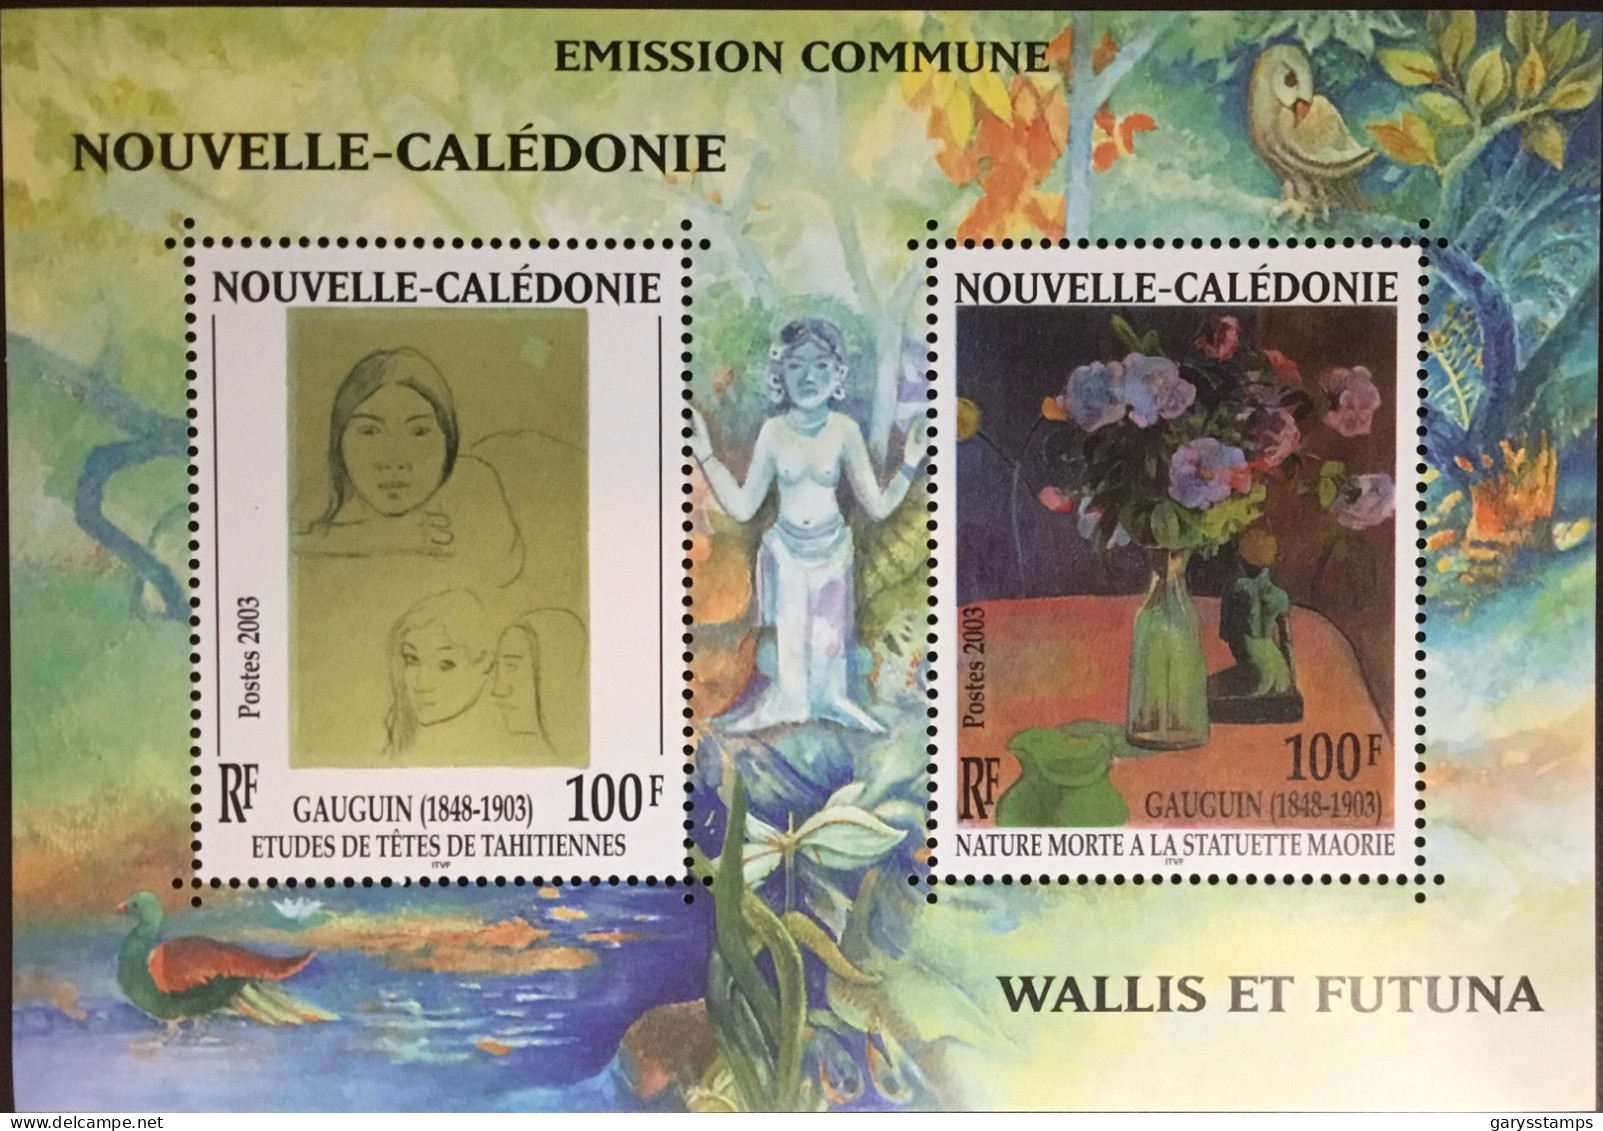 New Caledonia Caledonie 2003 Gauguin Centenary Joint Issue Minisheet MNH - Nuevos